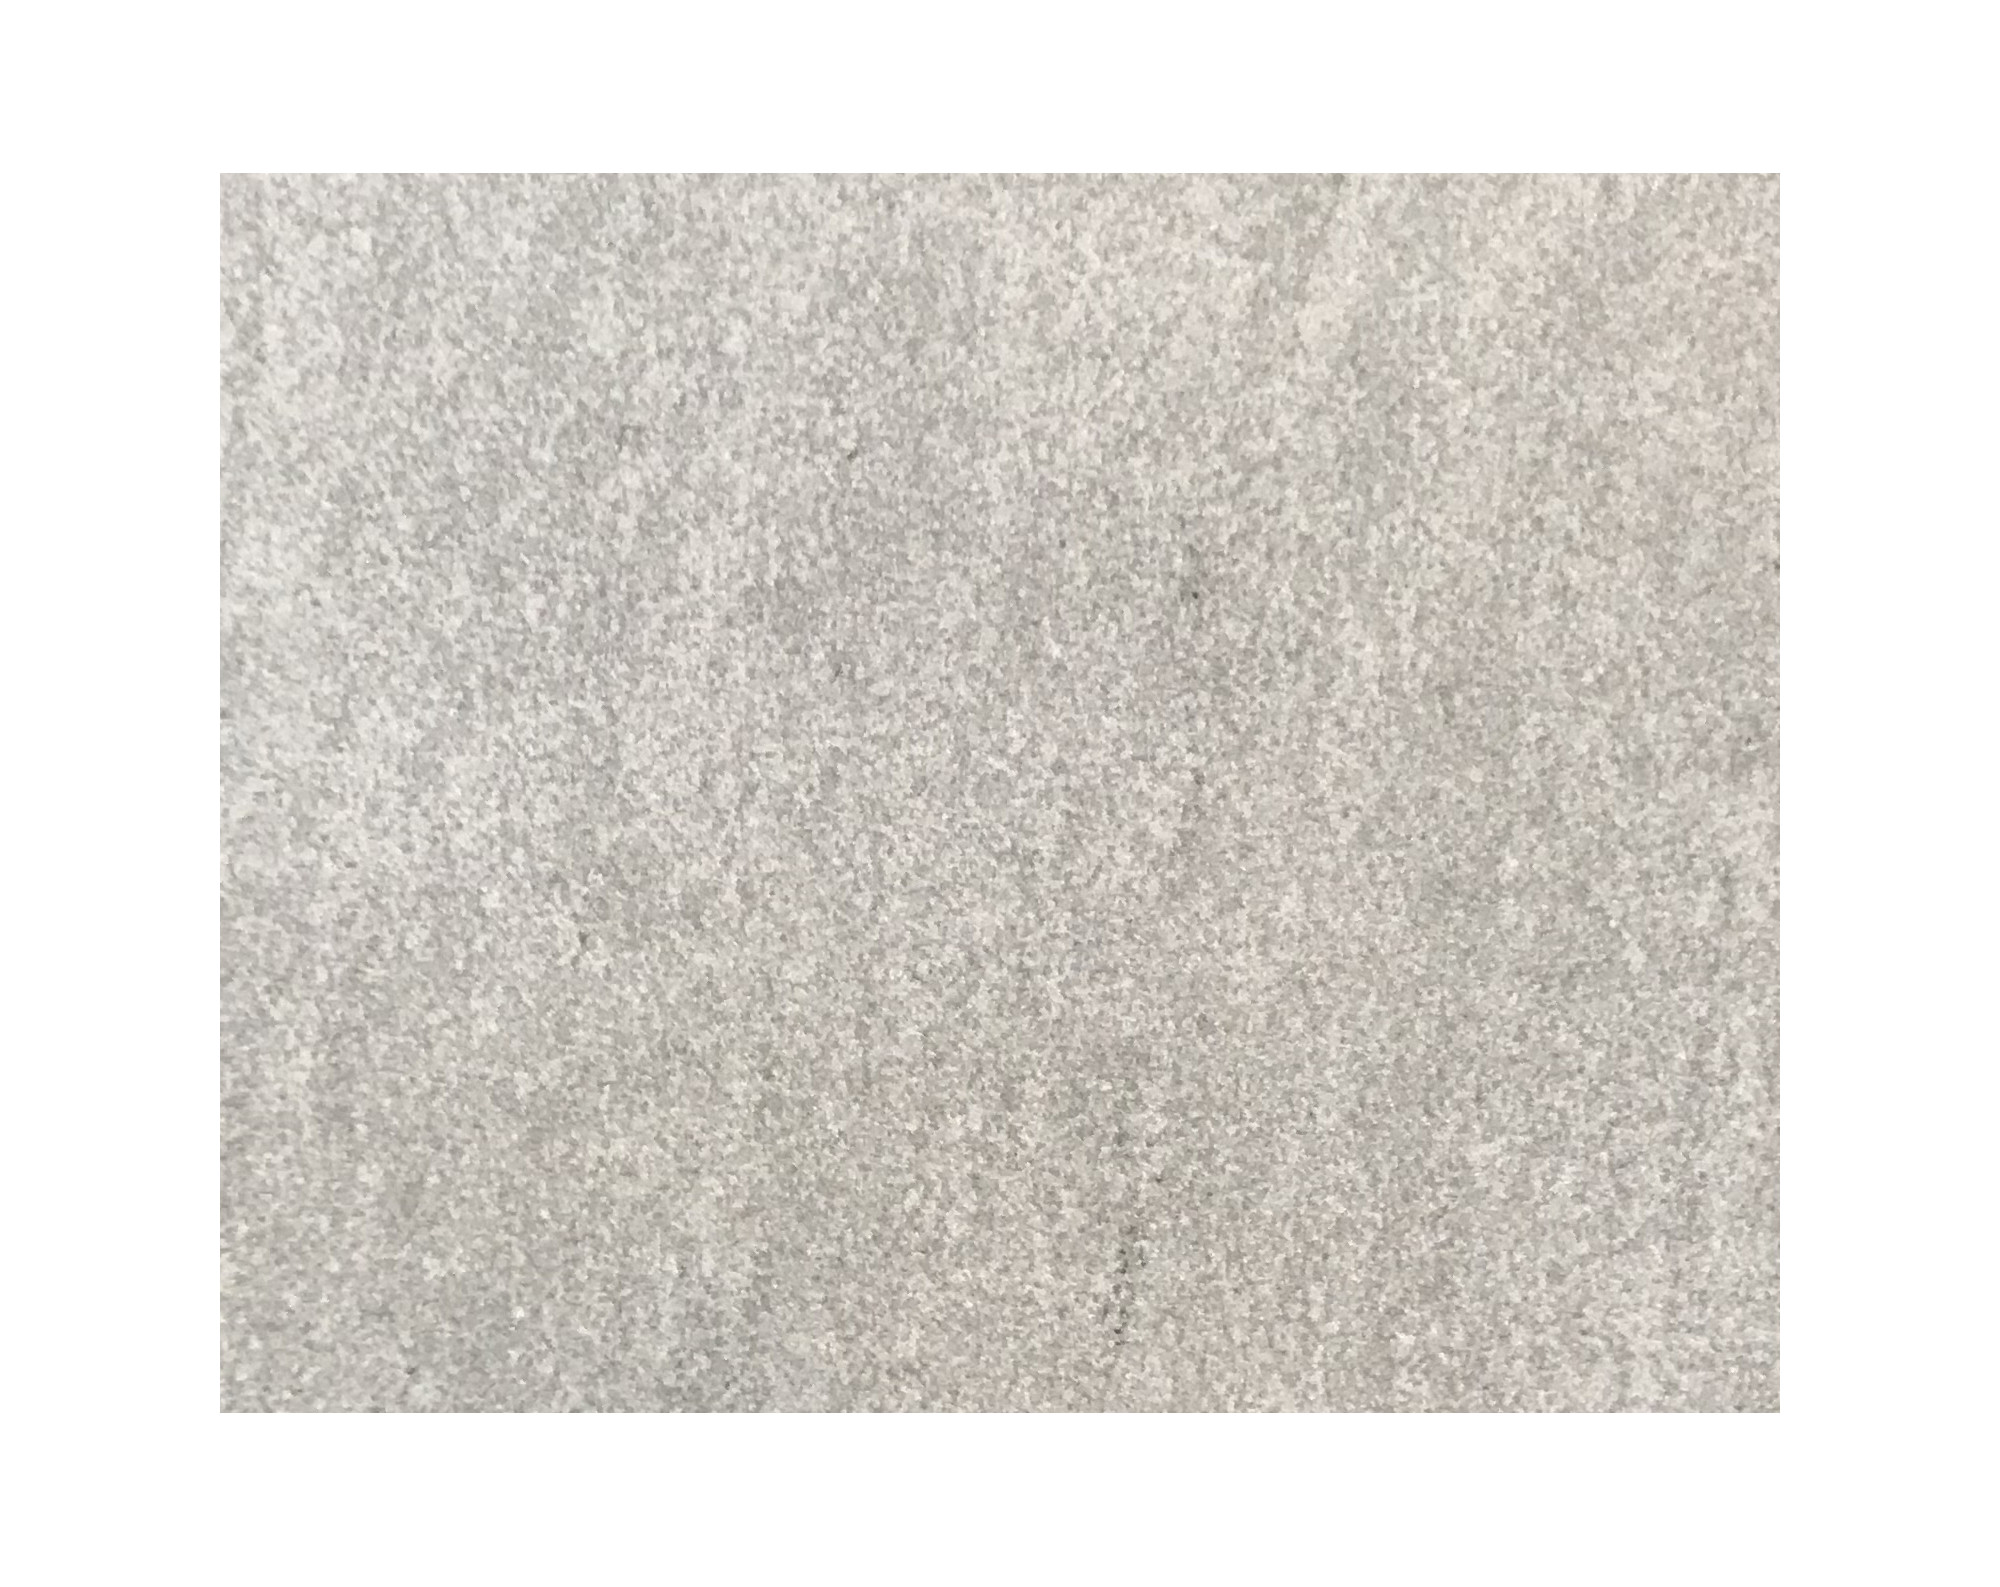 Harmo roc firenzeset, keramiek-serie, ovaal d:3,50mx6,20m, zand grijs, keramisch porselein